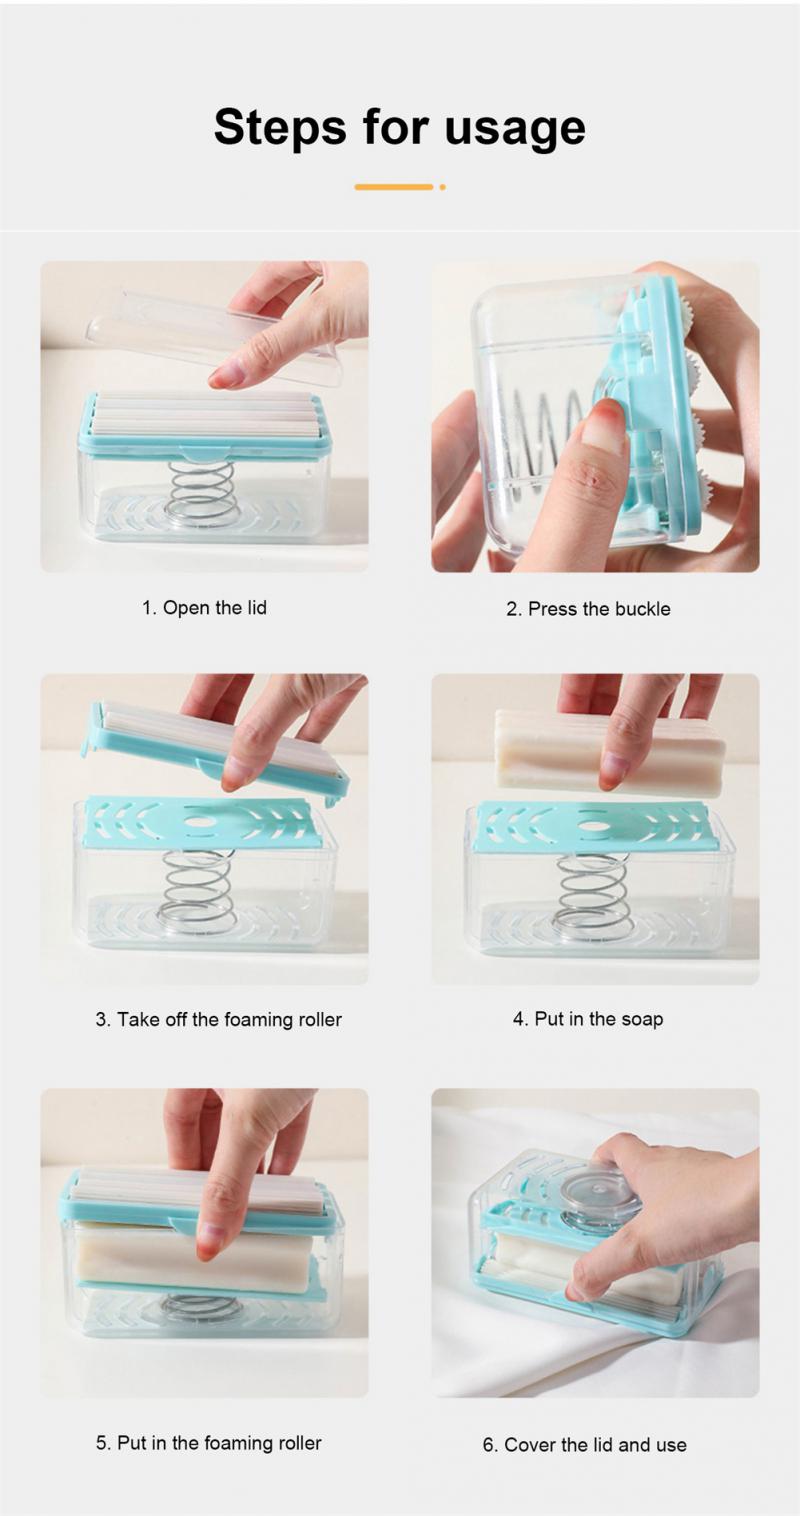 Multifunctional Laundry Soap Dish Rub-free Soap Box(3 pc)